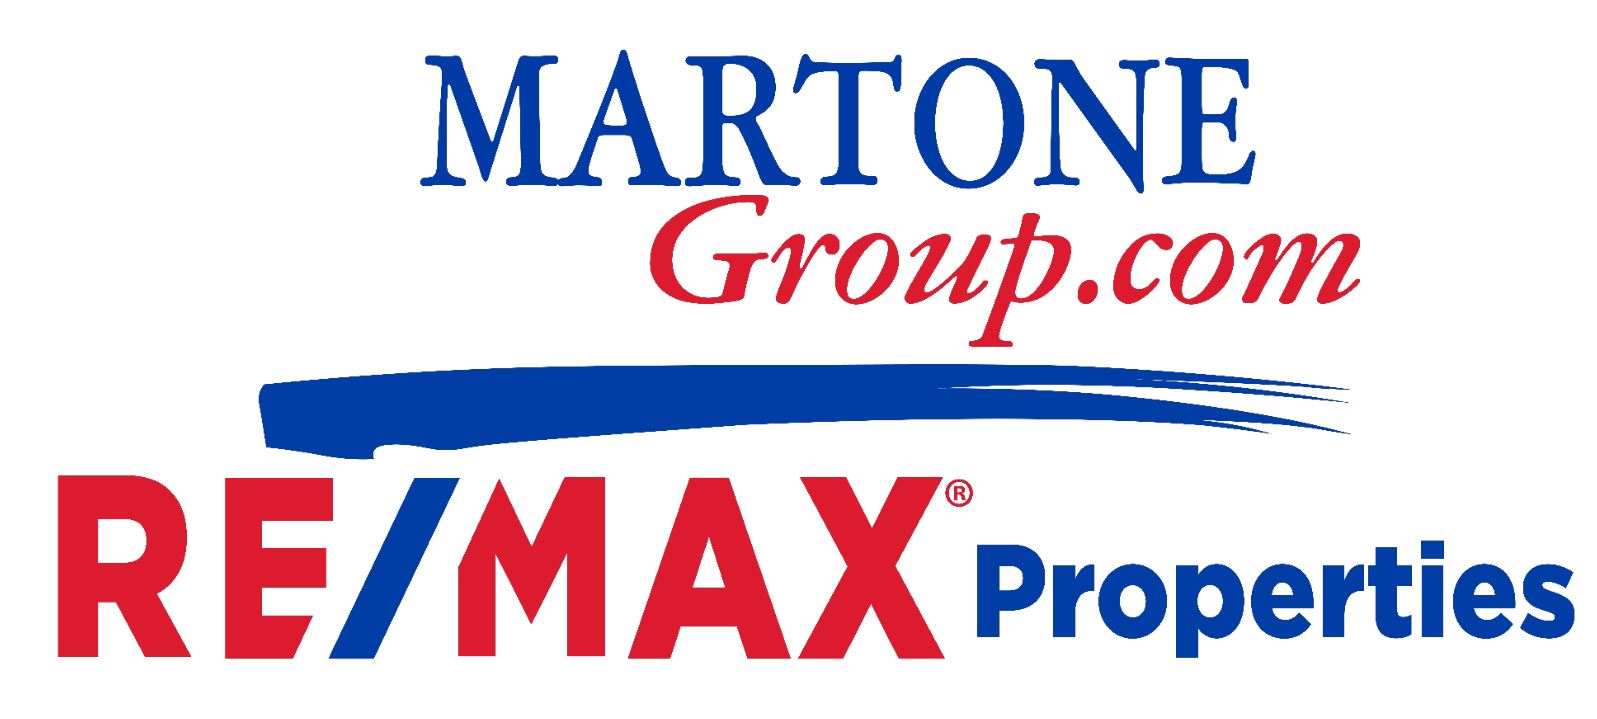 The Martone Group